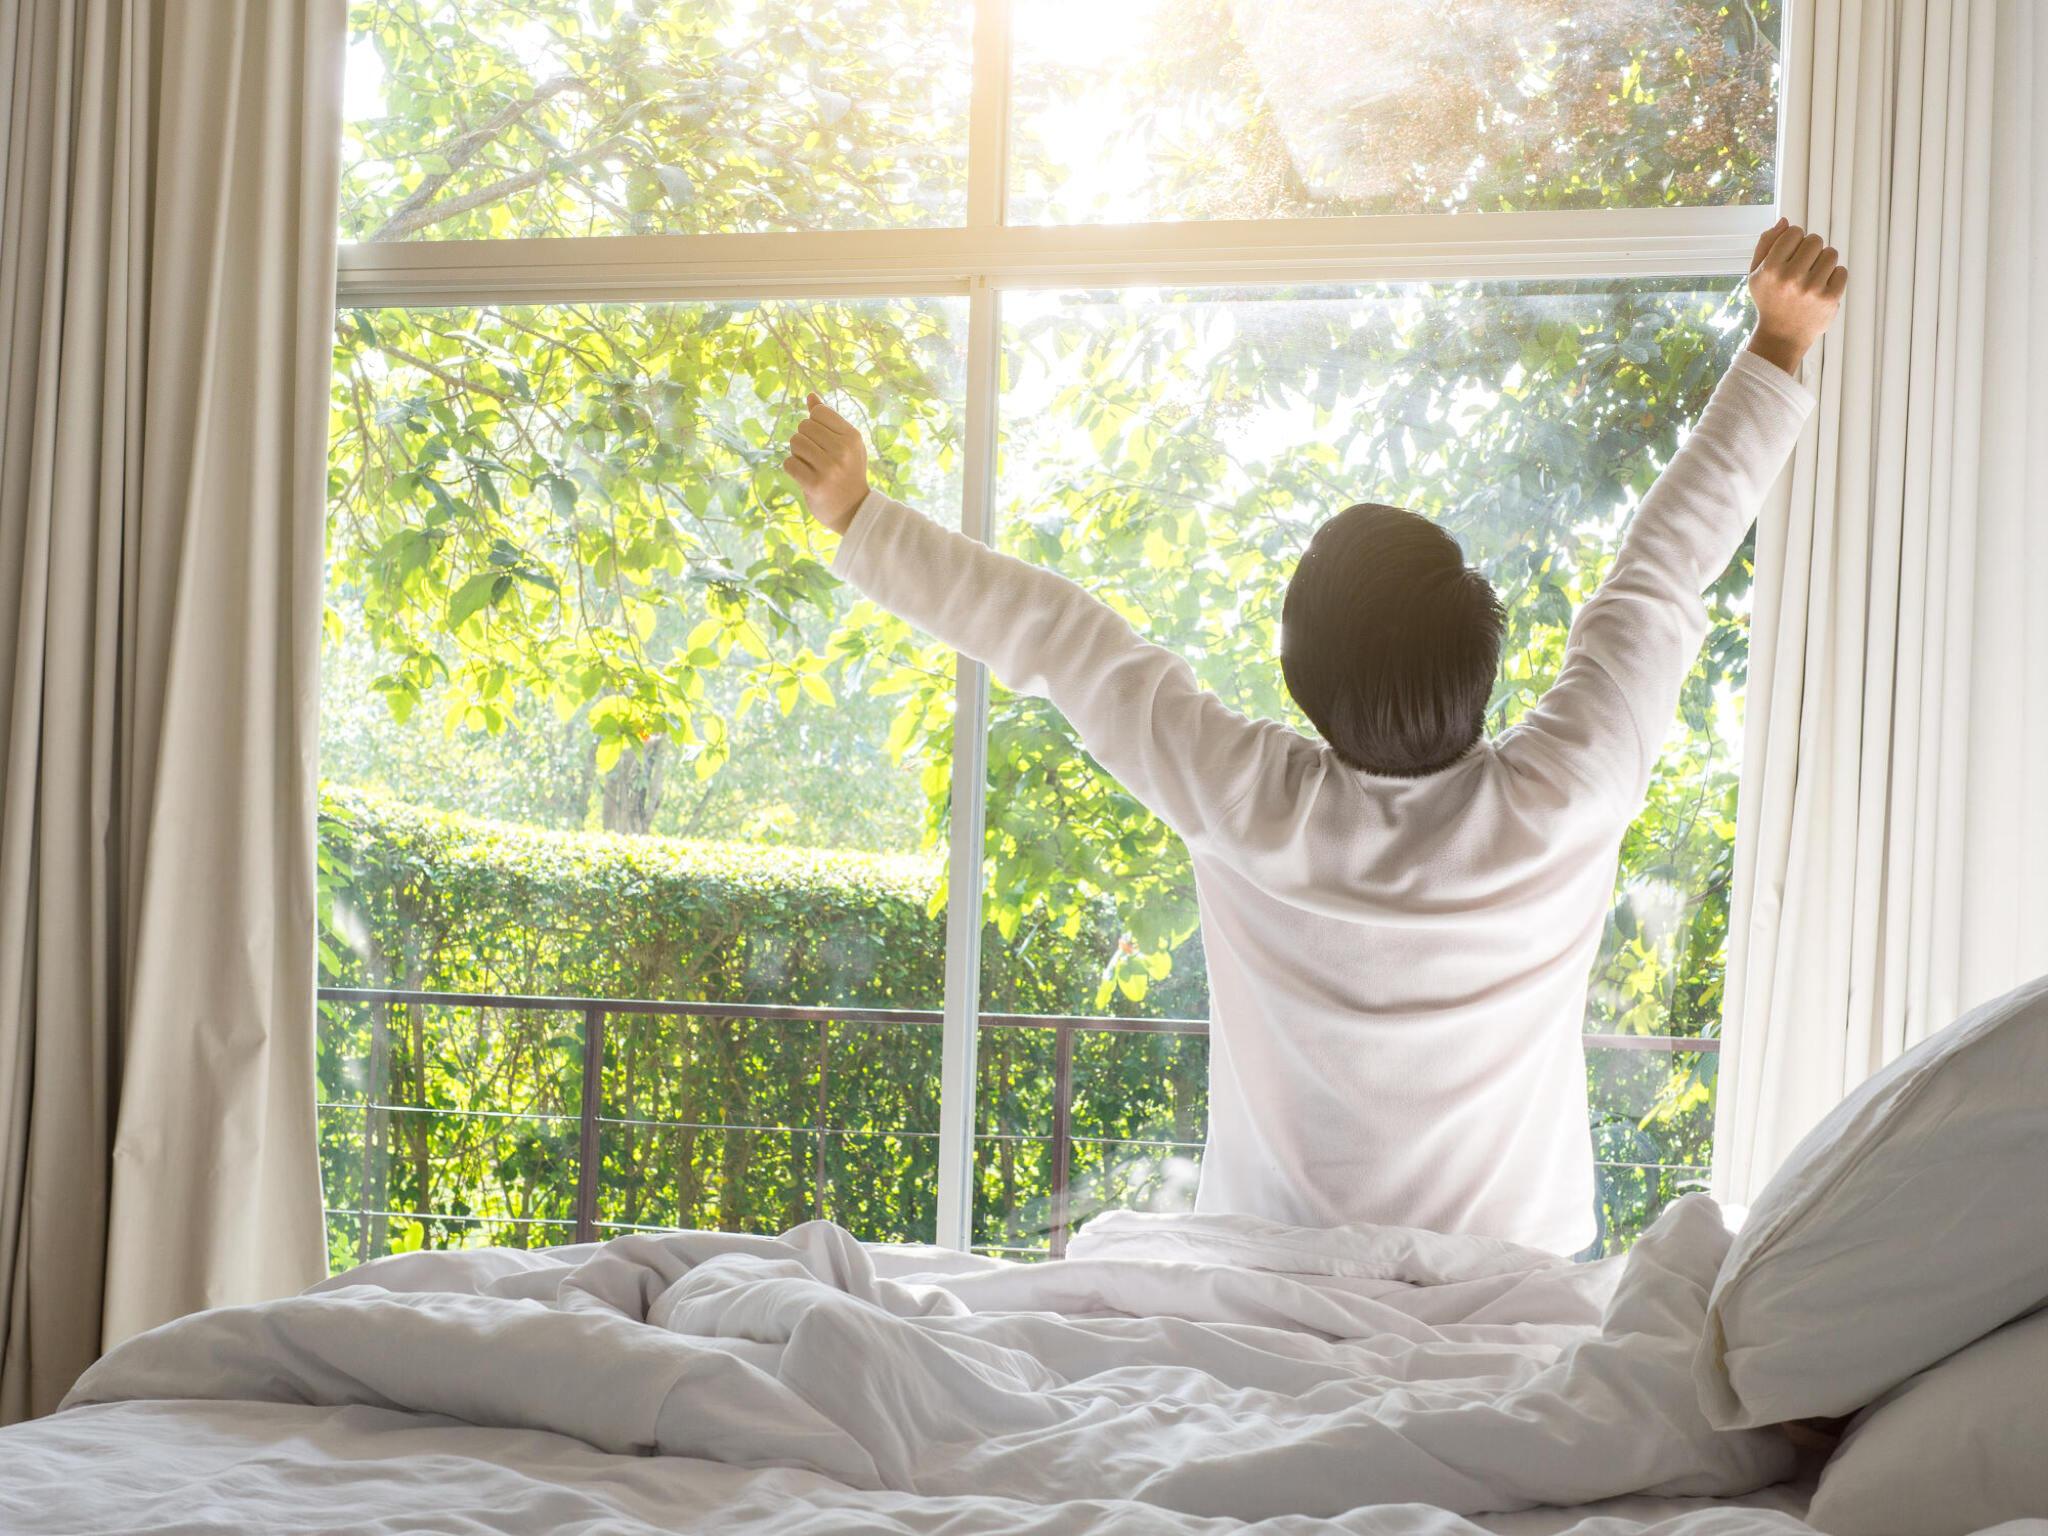 Lifestyle Factors and Sleep Improvement